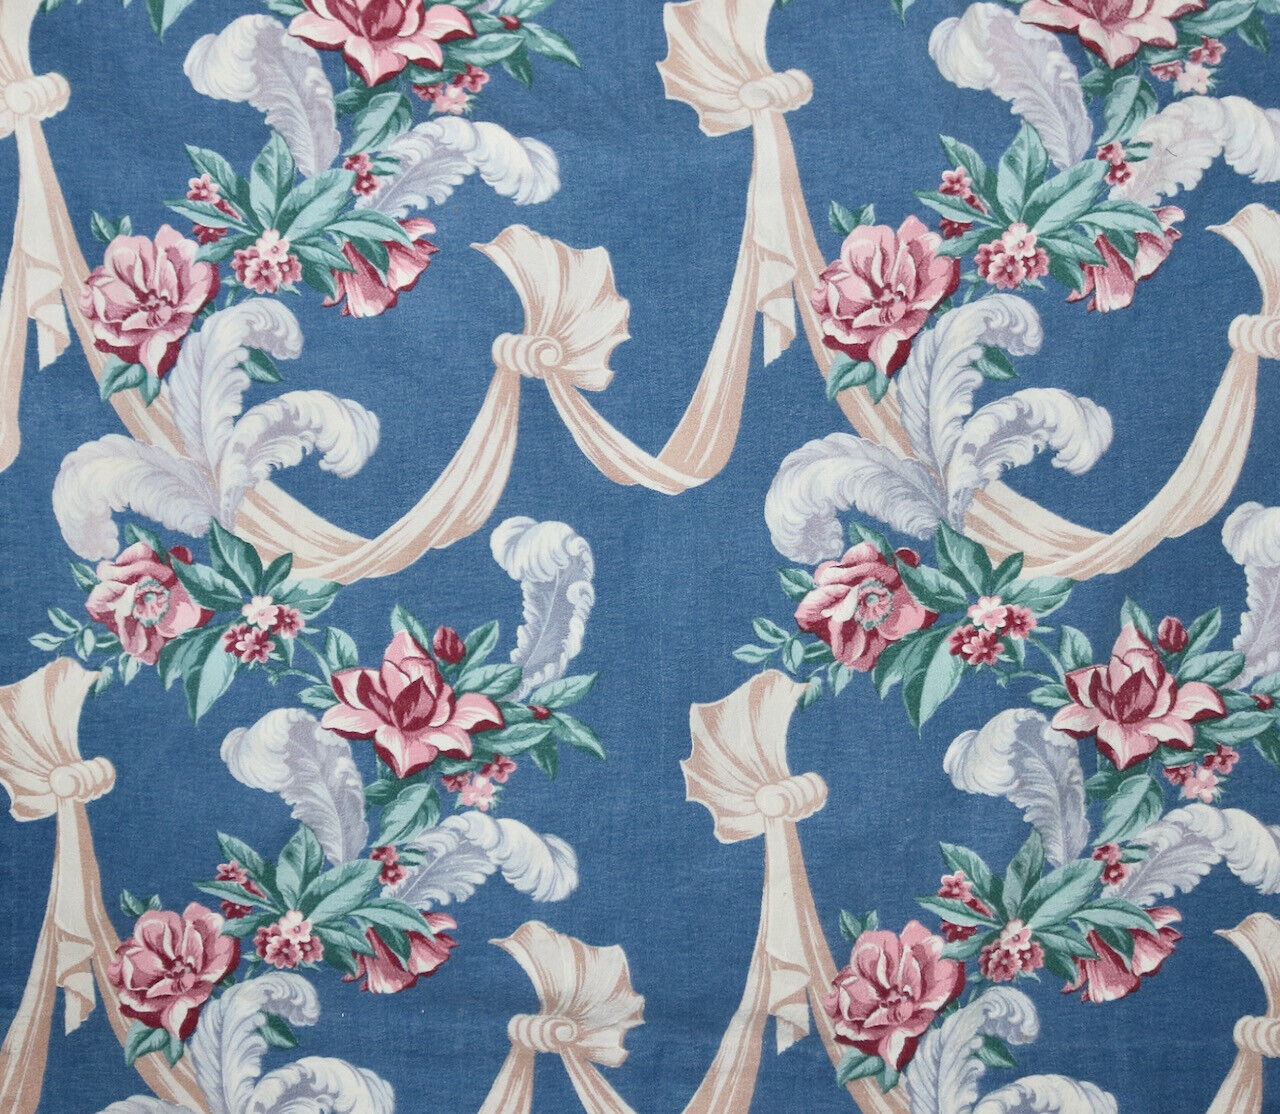 Vintage Barkcloth blue floral curtain damaged for fabric